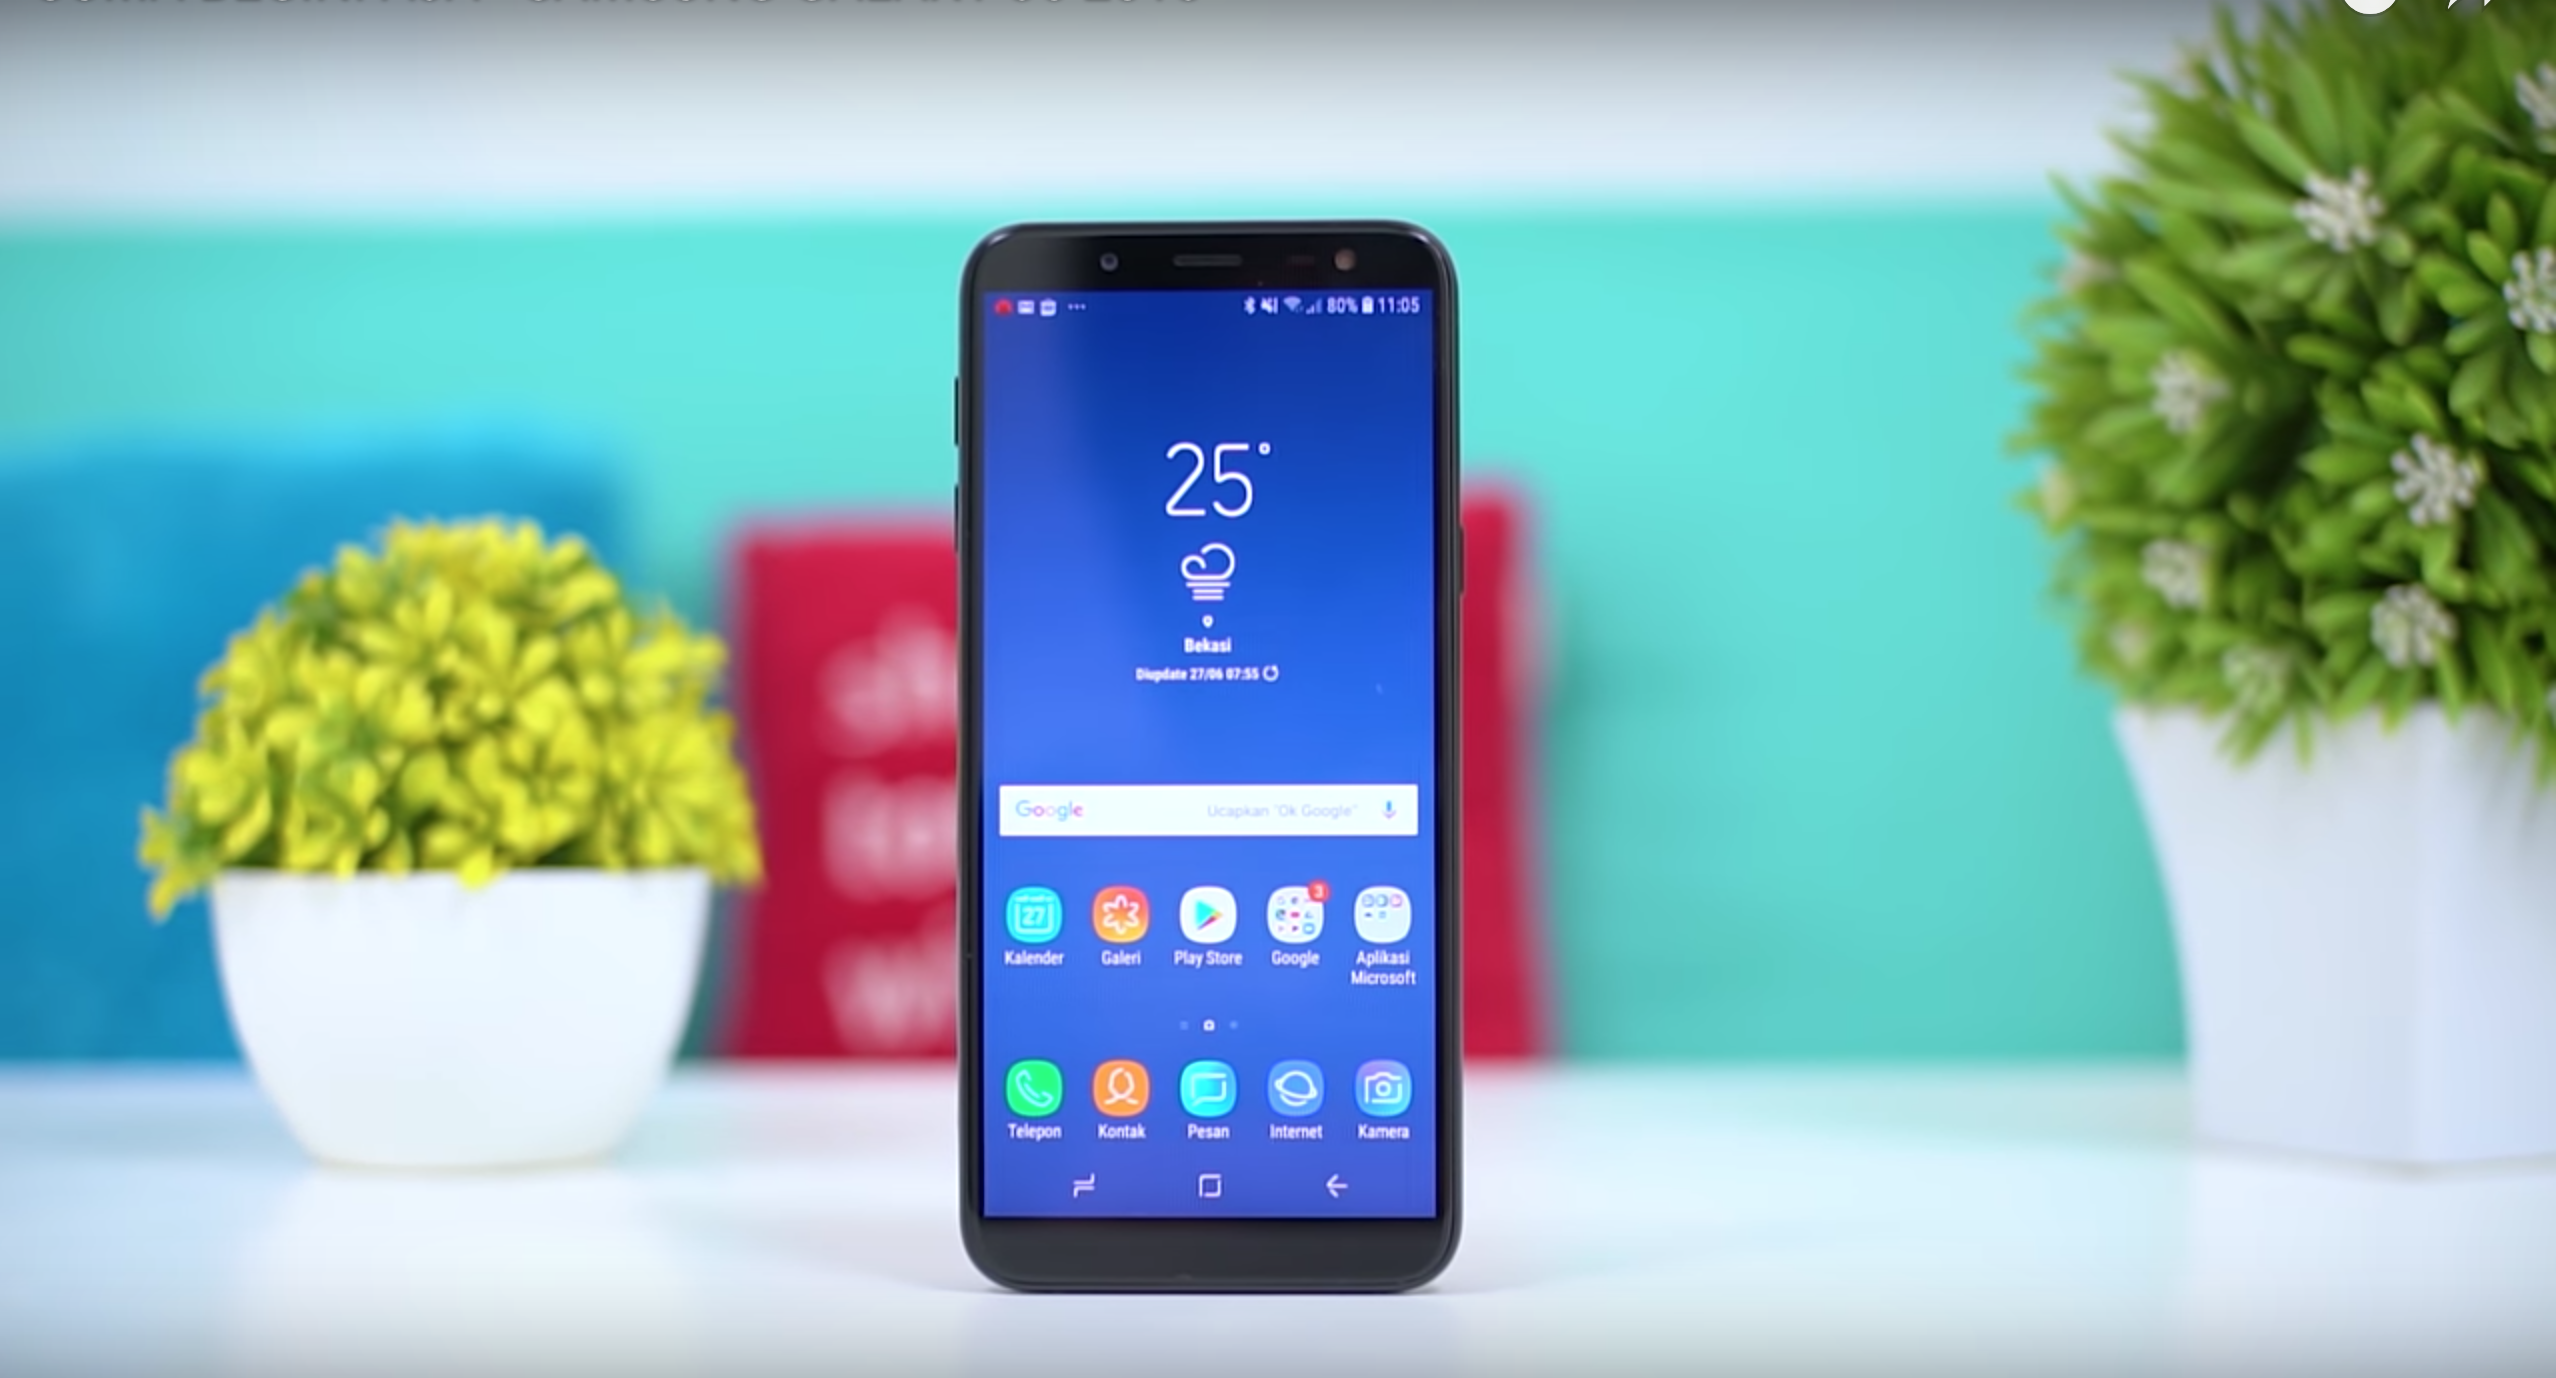 Smartphone Samsung Galaxy J6 (2018) - advantages and disadvantages